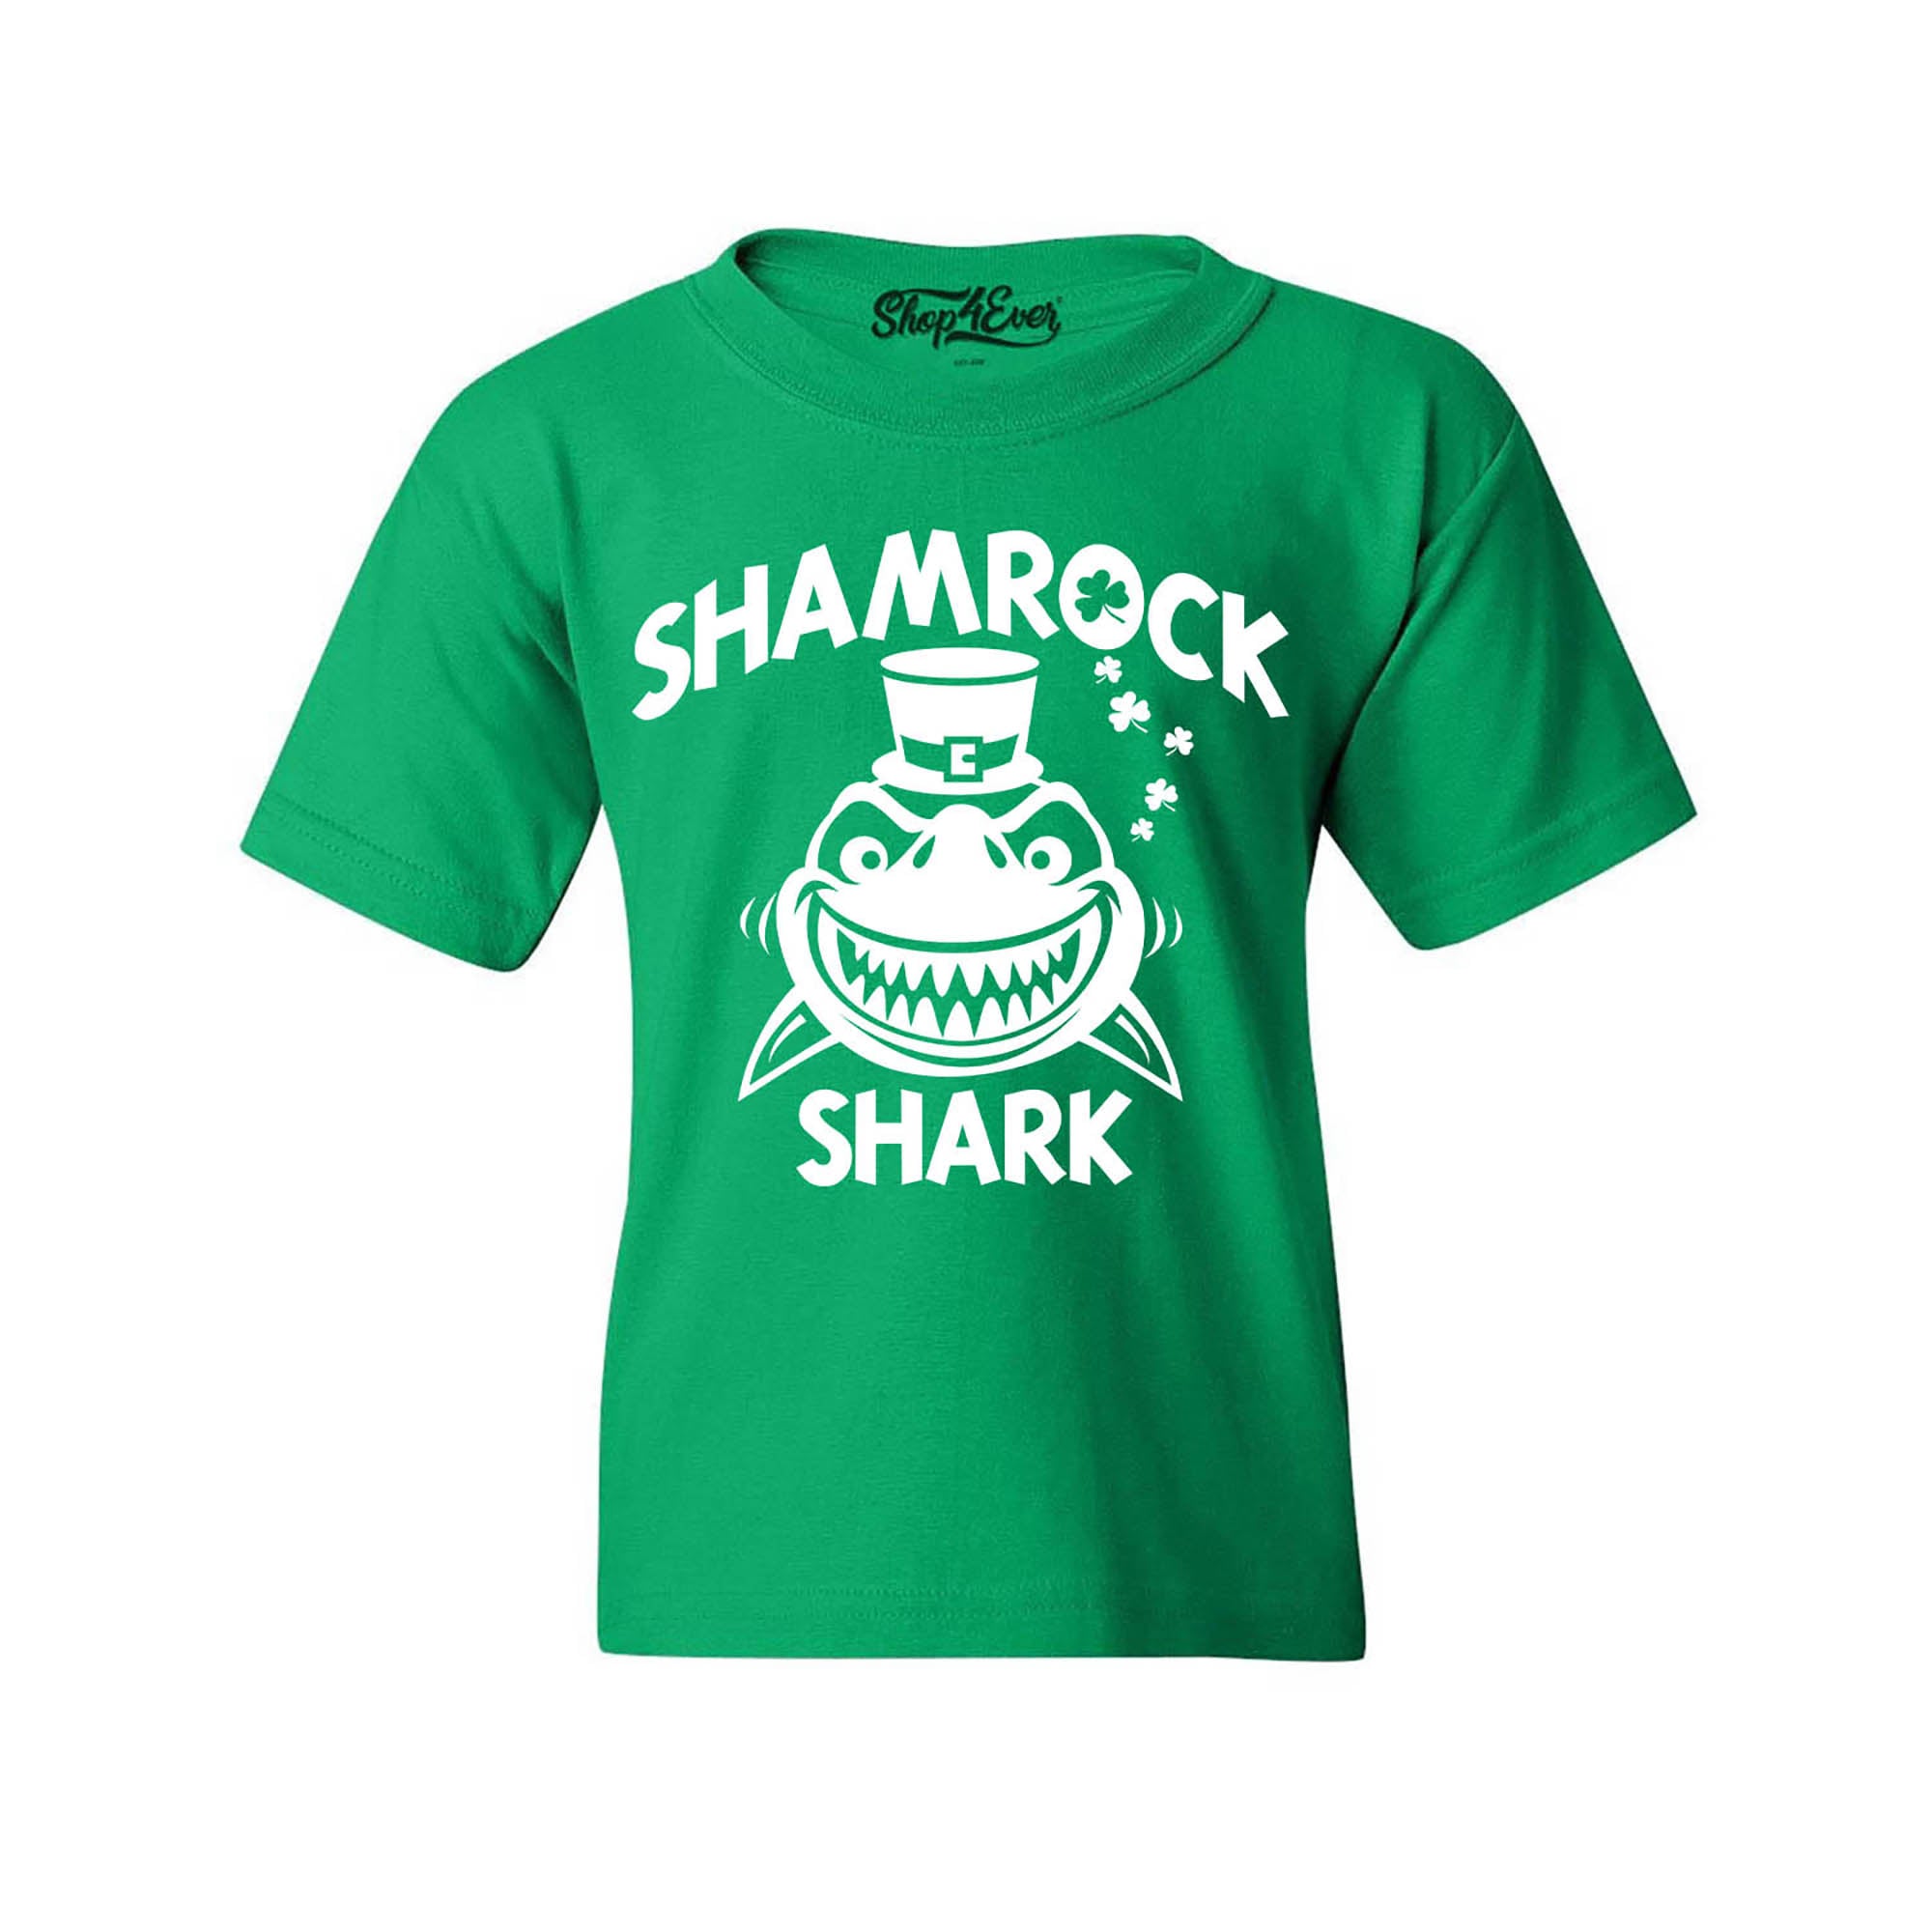 Shamrock Shark St. Patrick's Day Child's T-Shirt Kids Tee